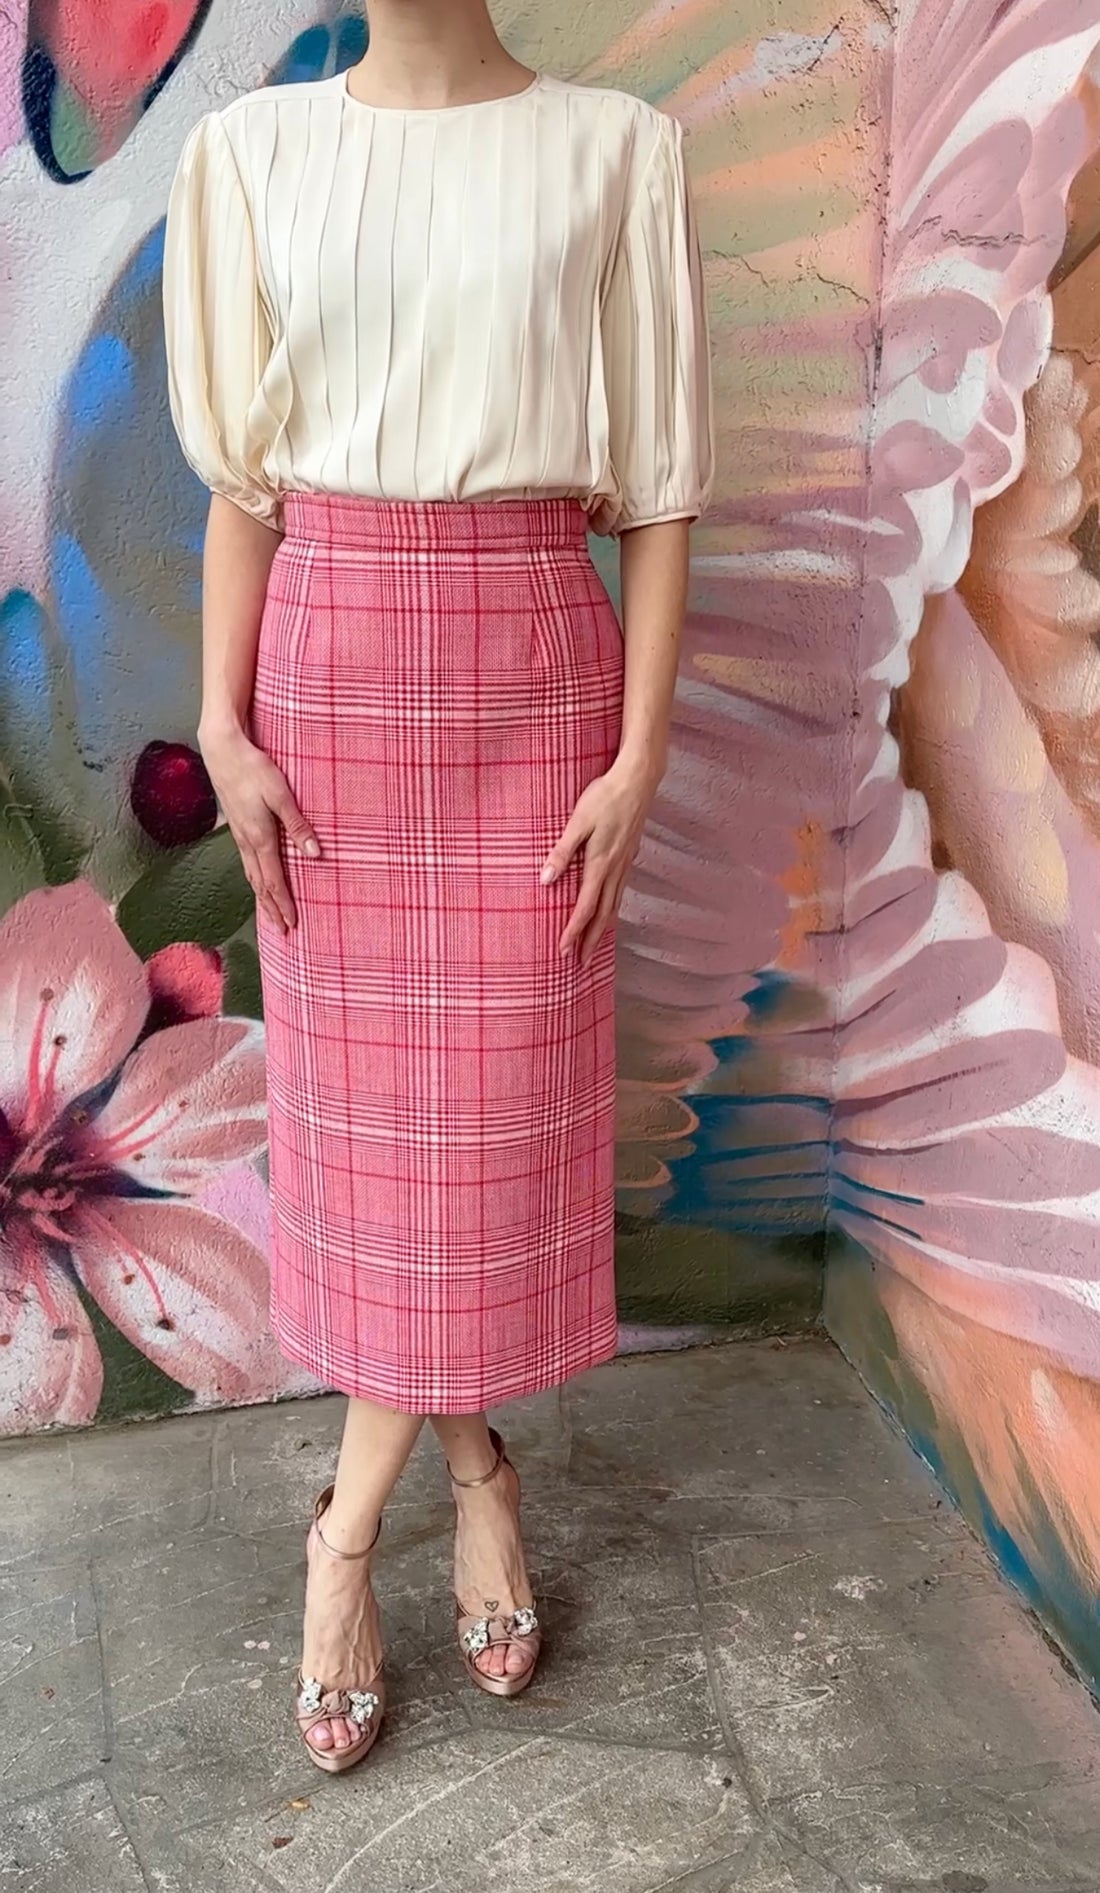 Miu Miu Cherry Pink Check Midi Pencil Skirt - USA 2 / XS